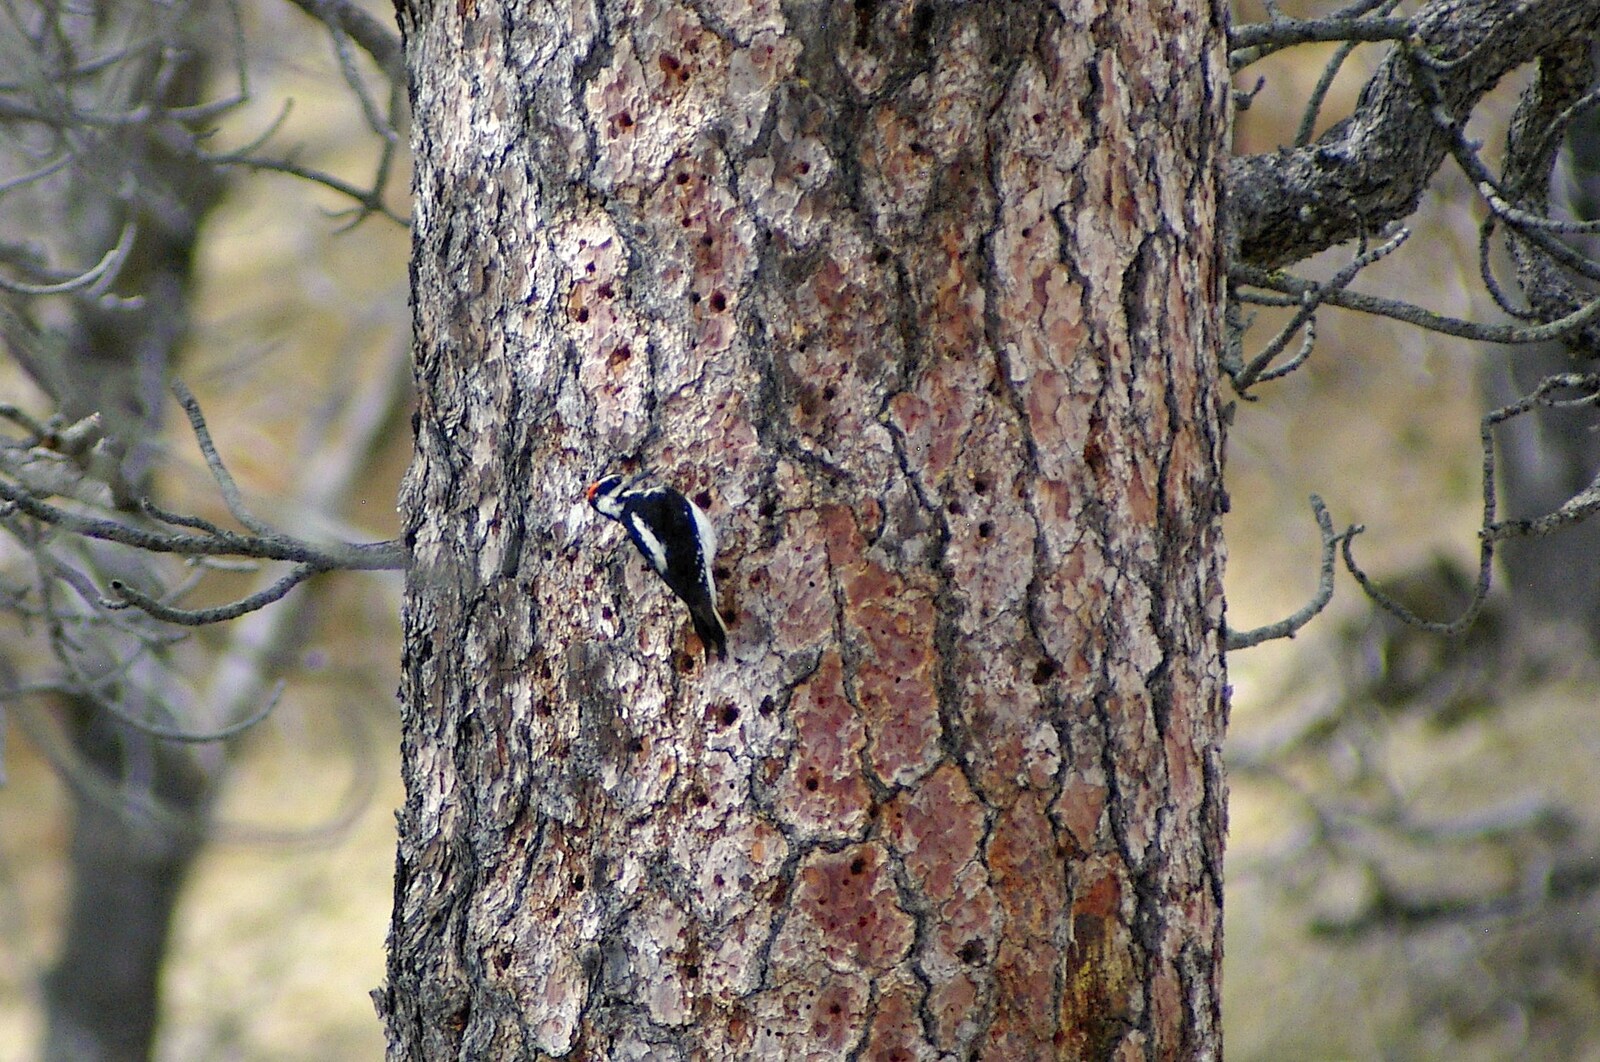 A headbanging woodpecker from California Snow: San Bernadino State Forest, California, US - 26th March 2006